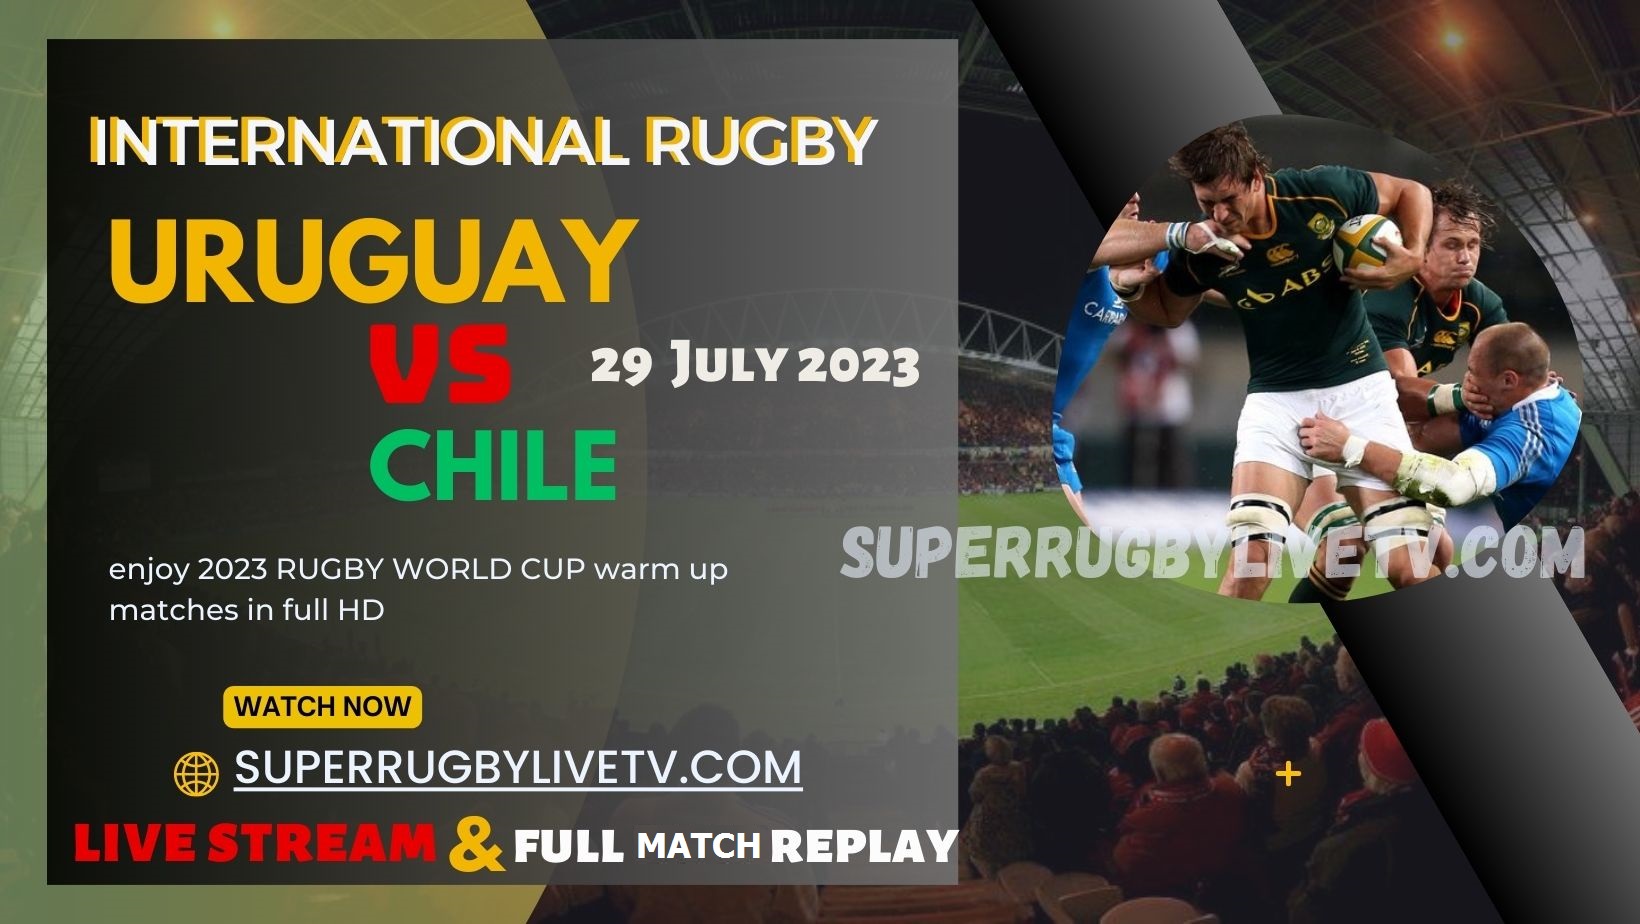 Uruguay vs Chile International Rugby Live Stream